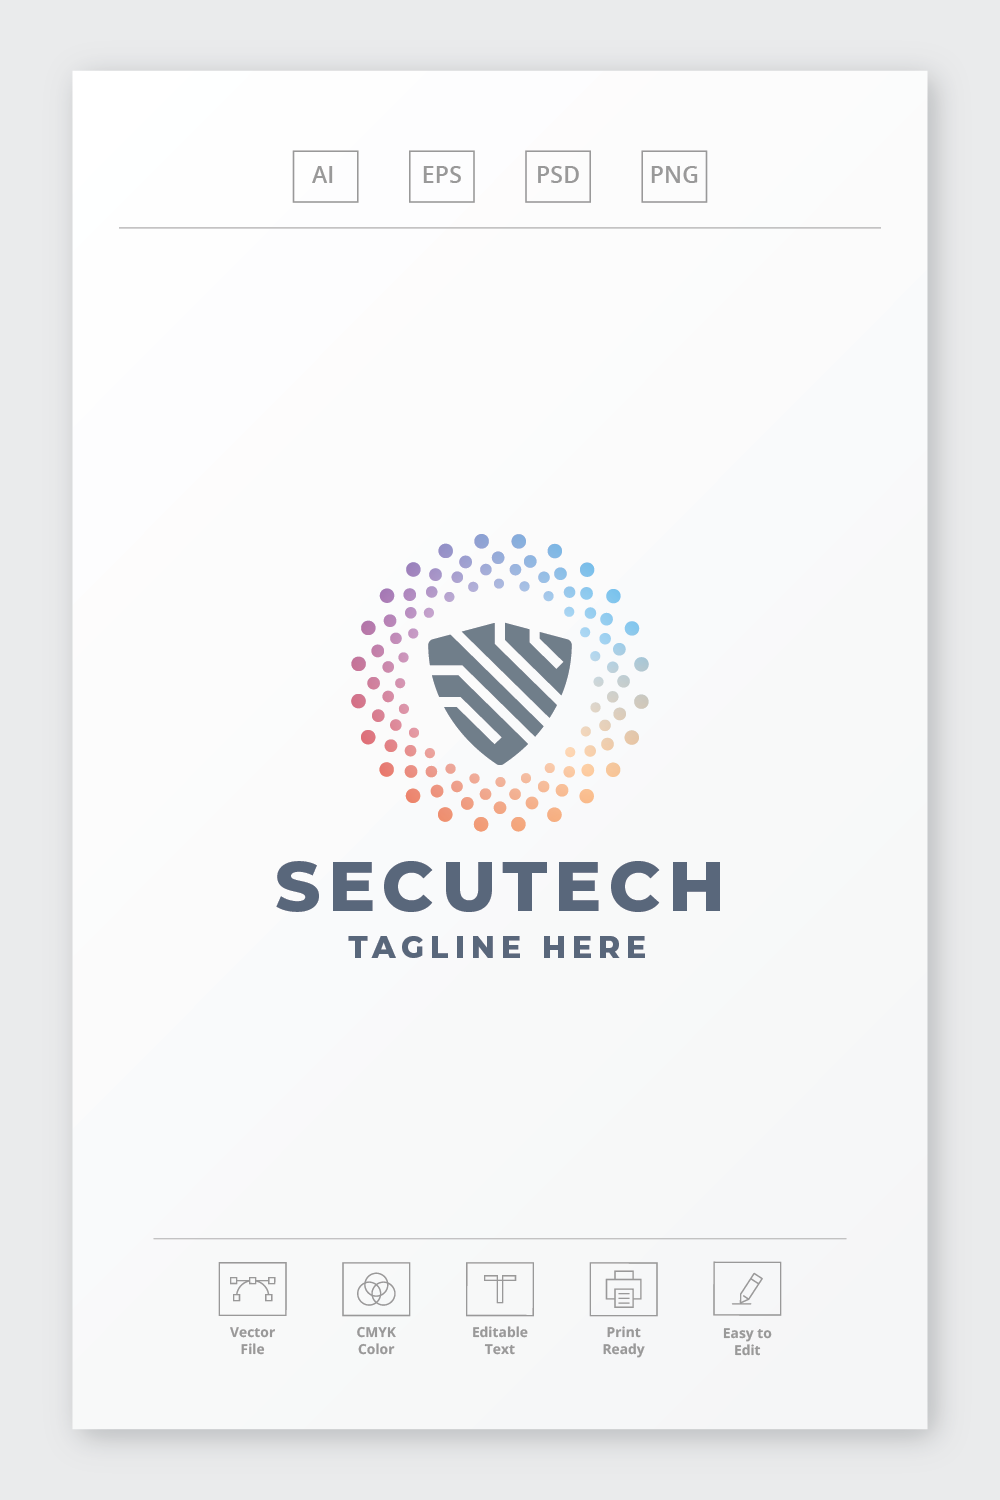 Secure Tech Logo pinterest preview image.